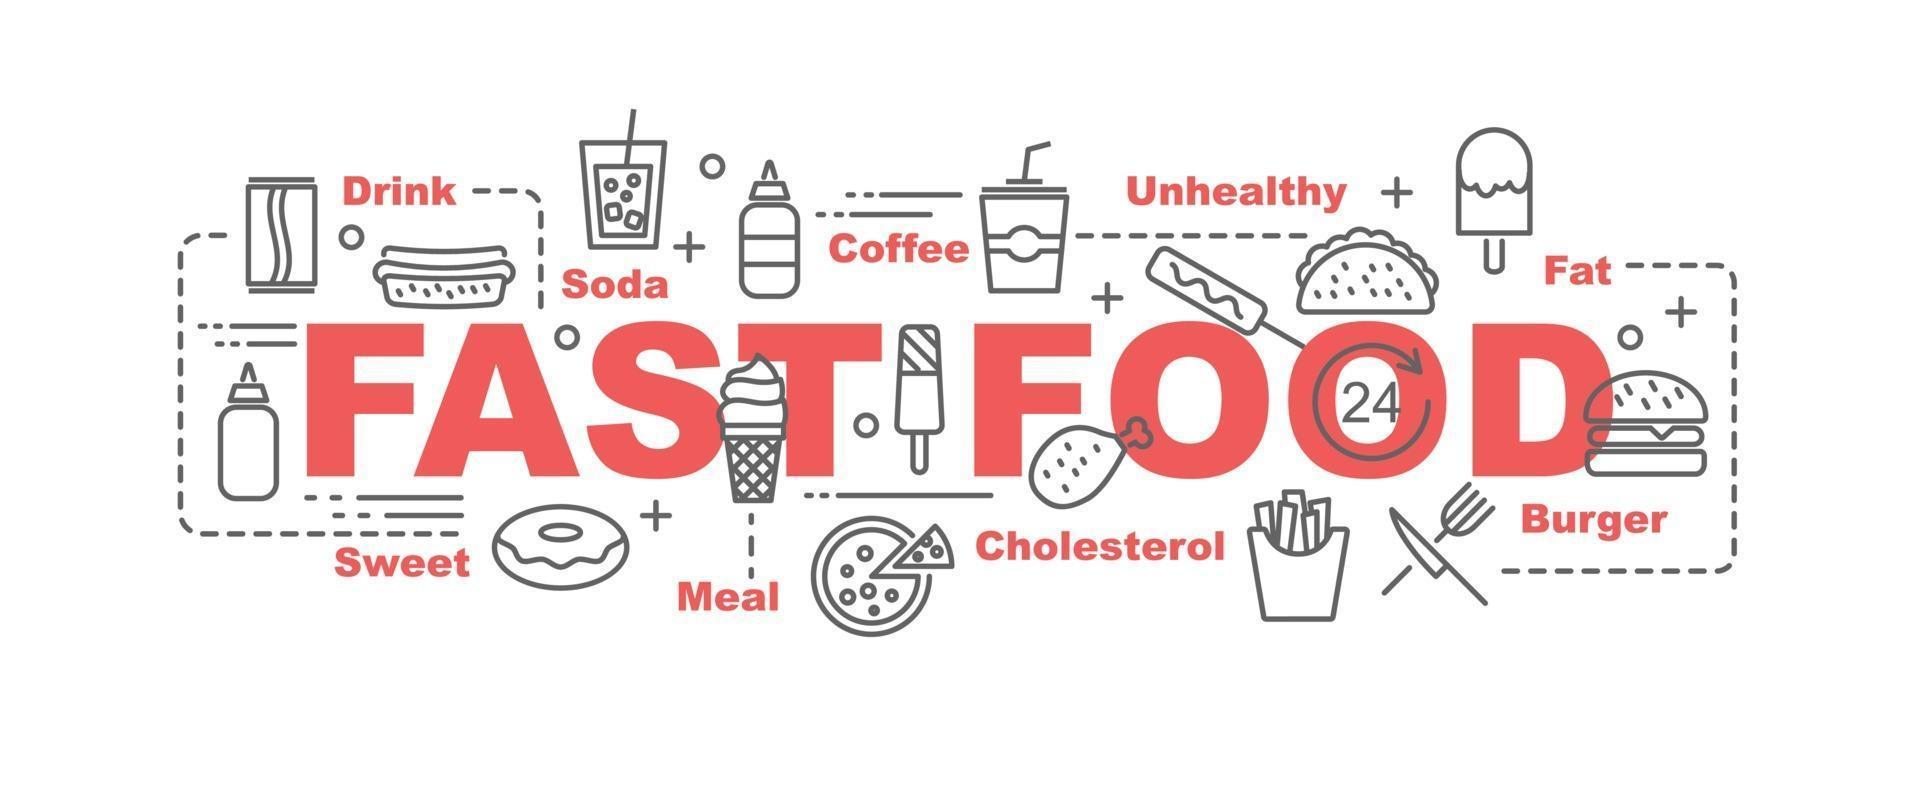 fastfood vector banner